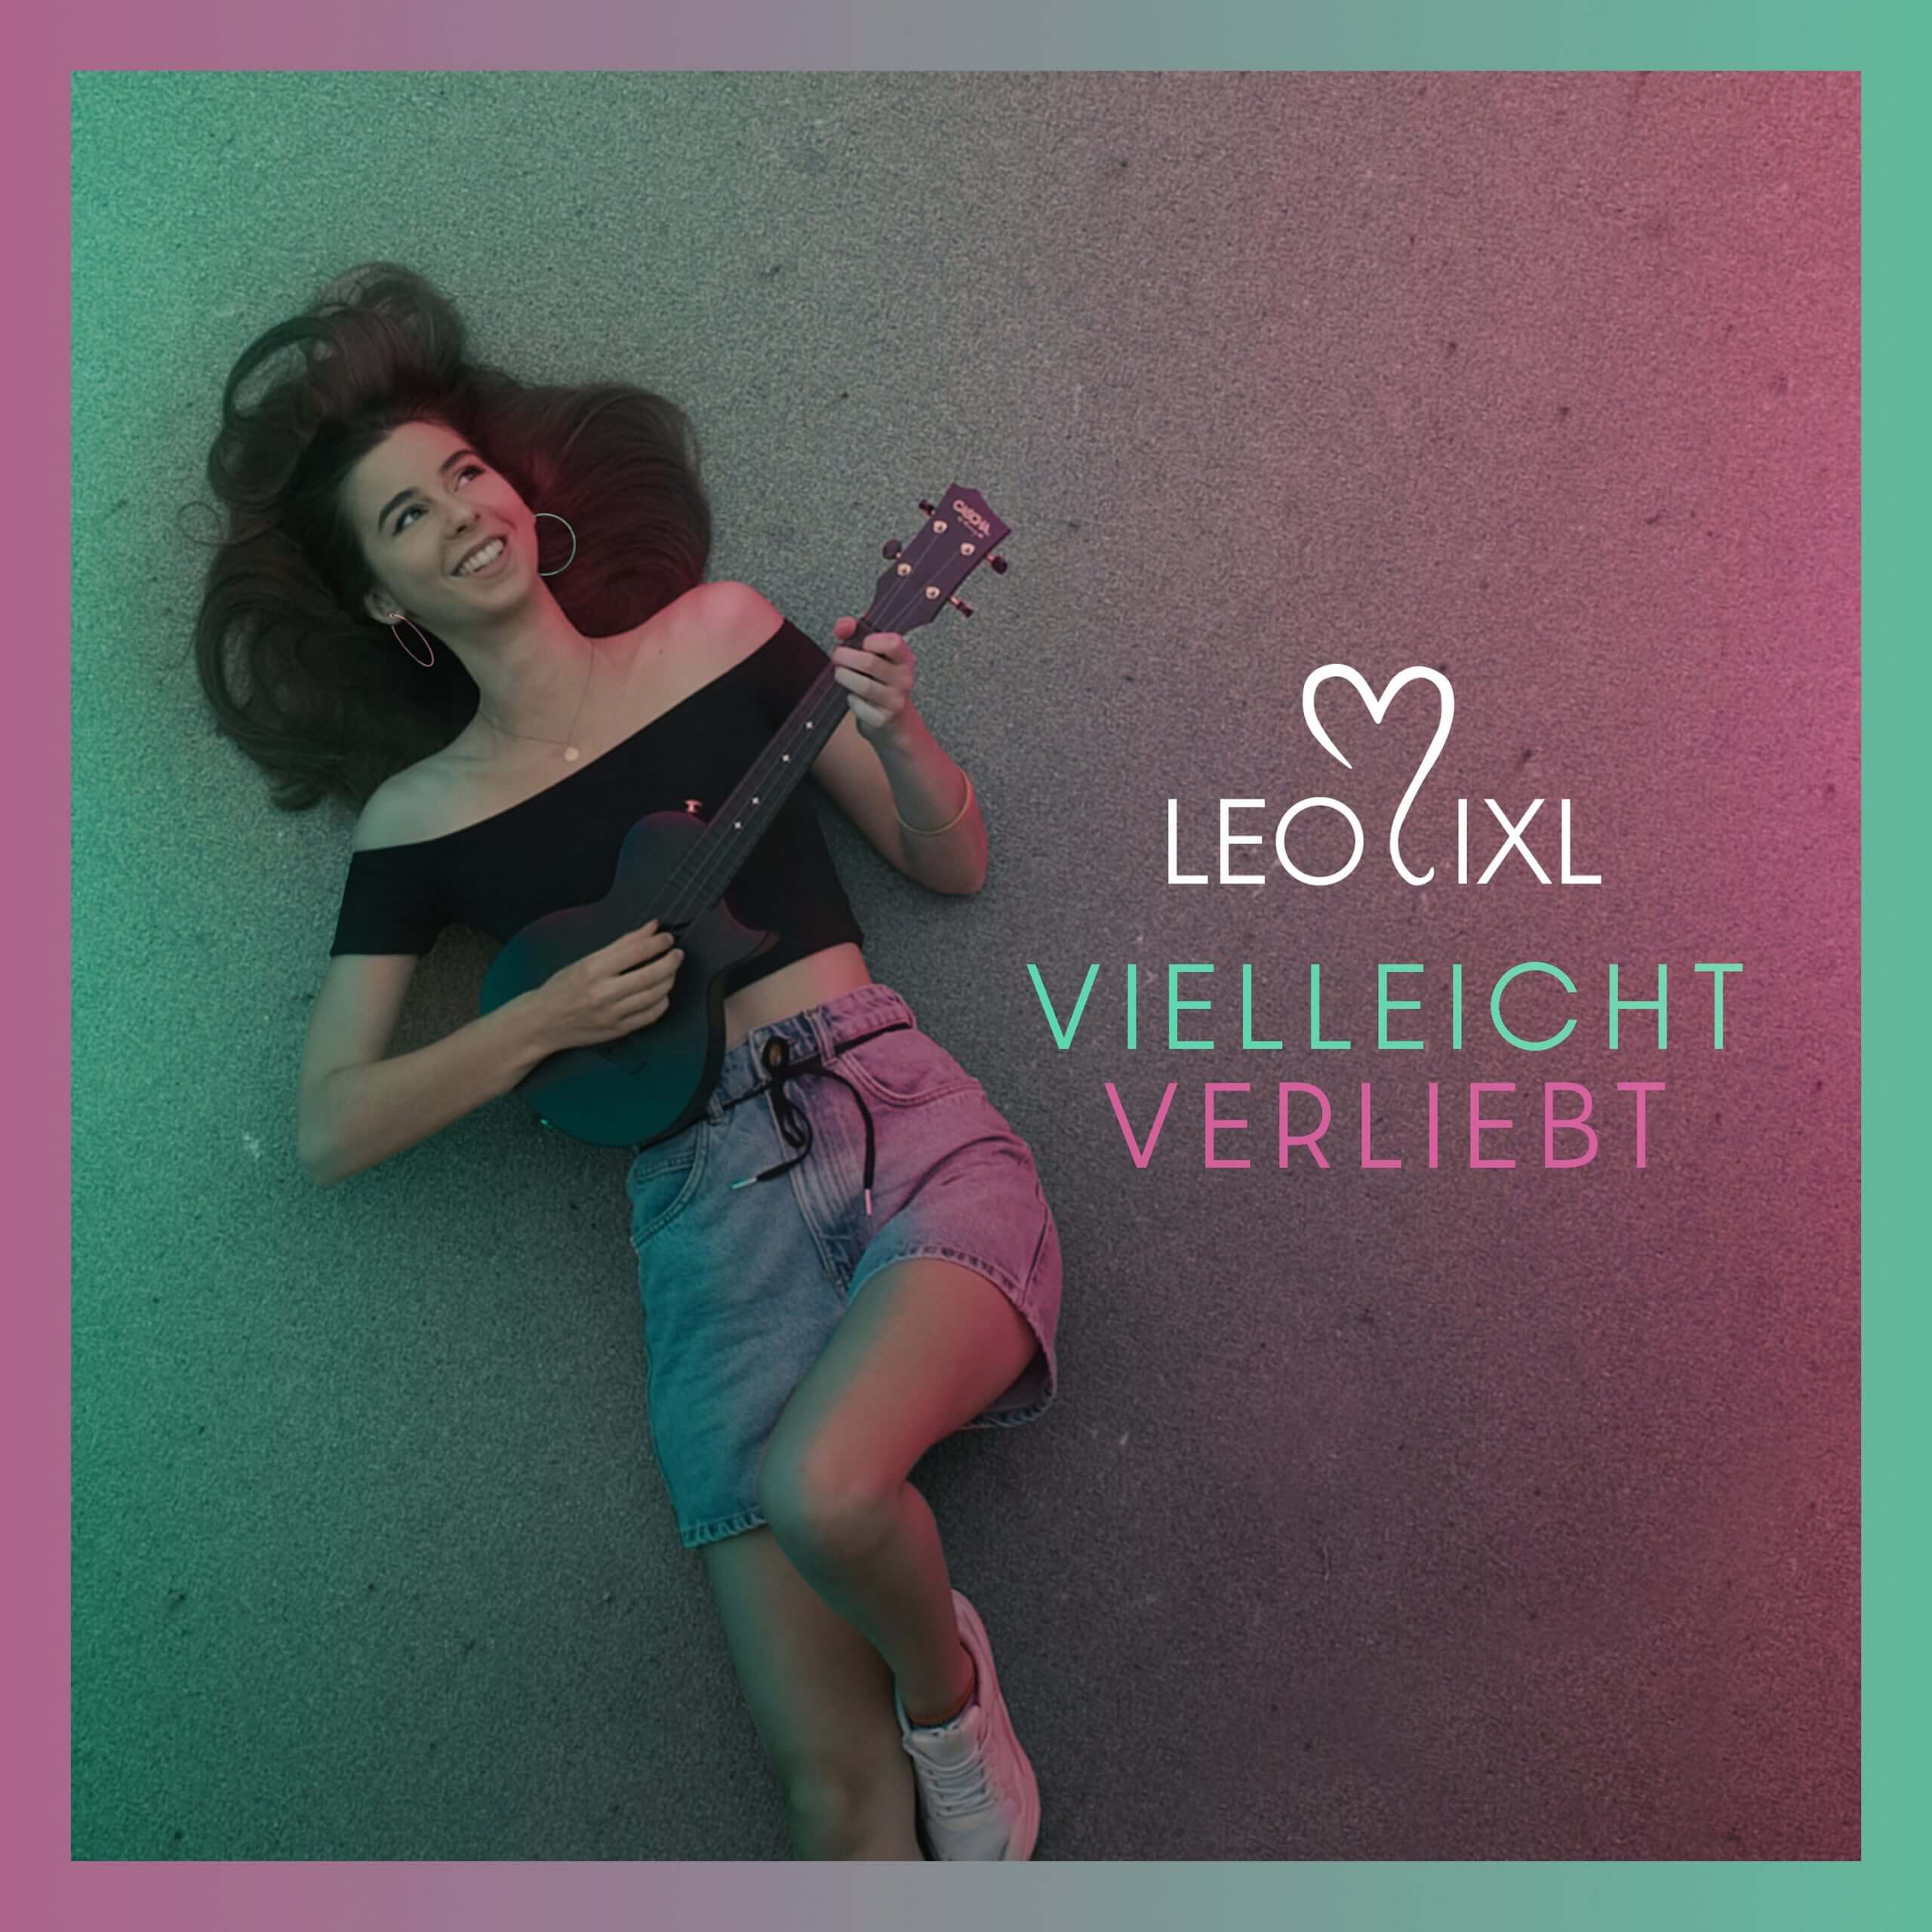 Leolixl - “Vielleicht Verliebt“ (Single – Ariola/Sony Music) 